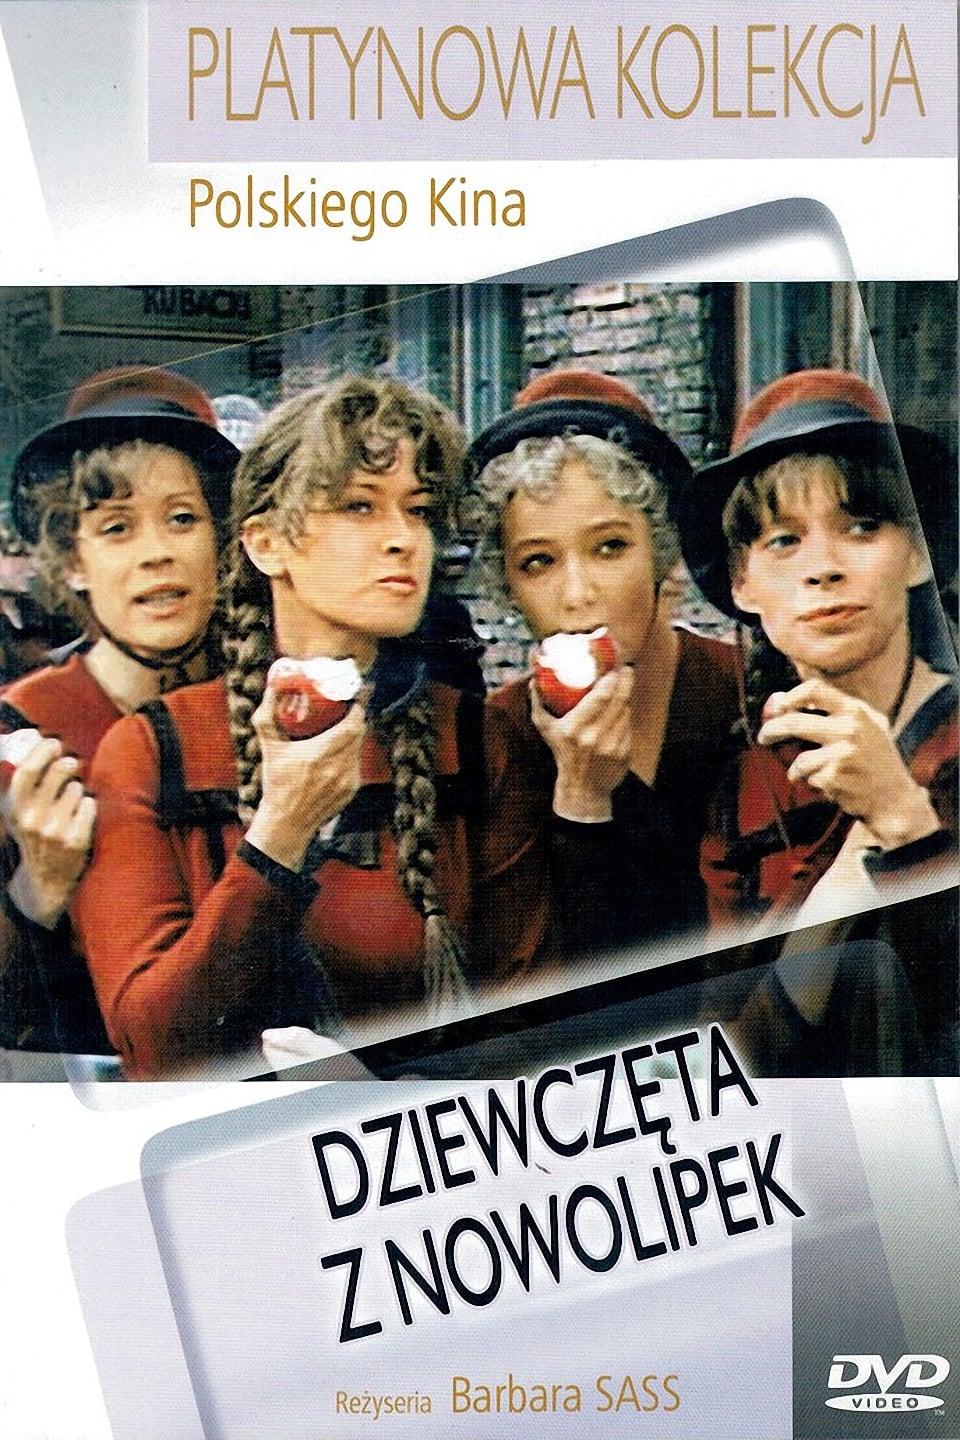 The Girls of Nowolipki (1985)